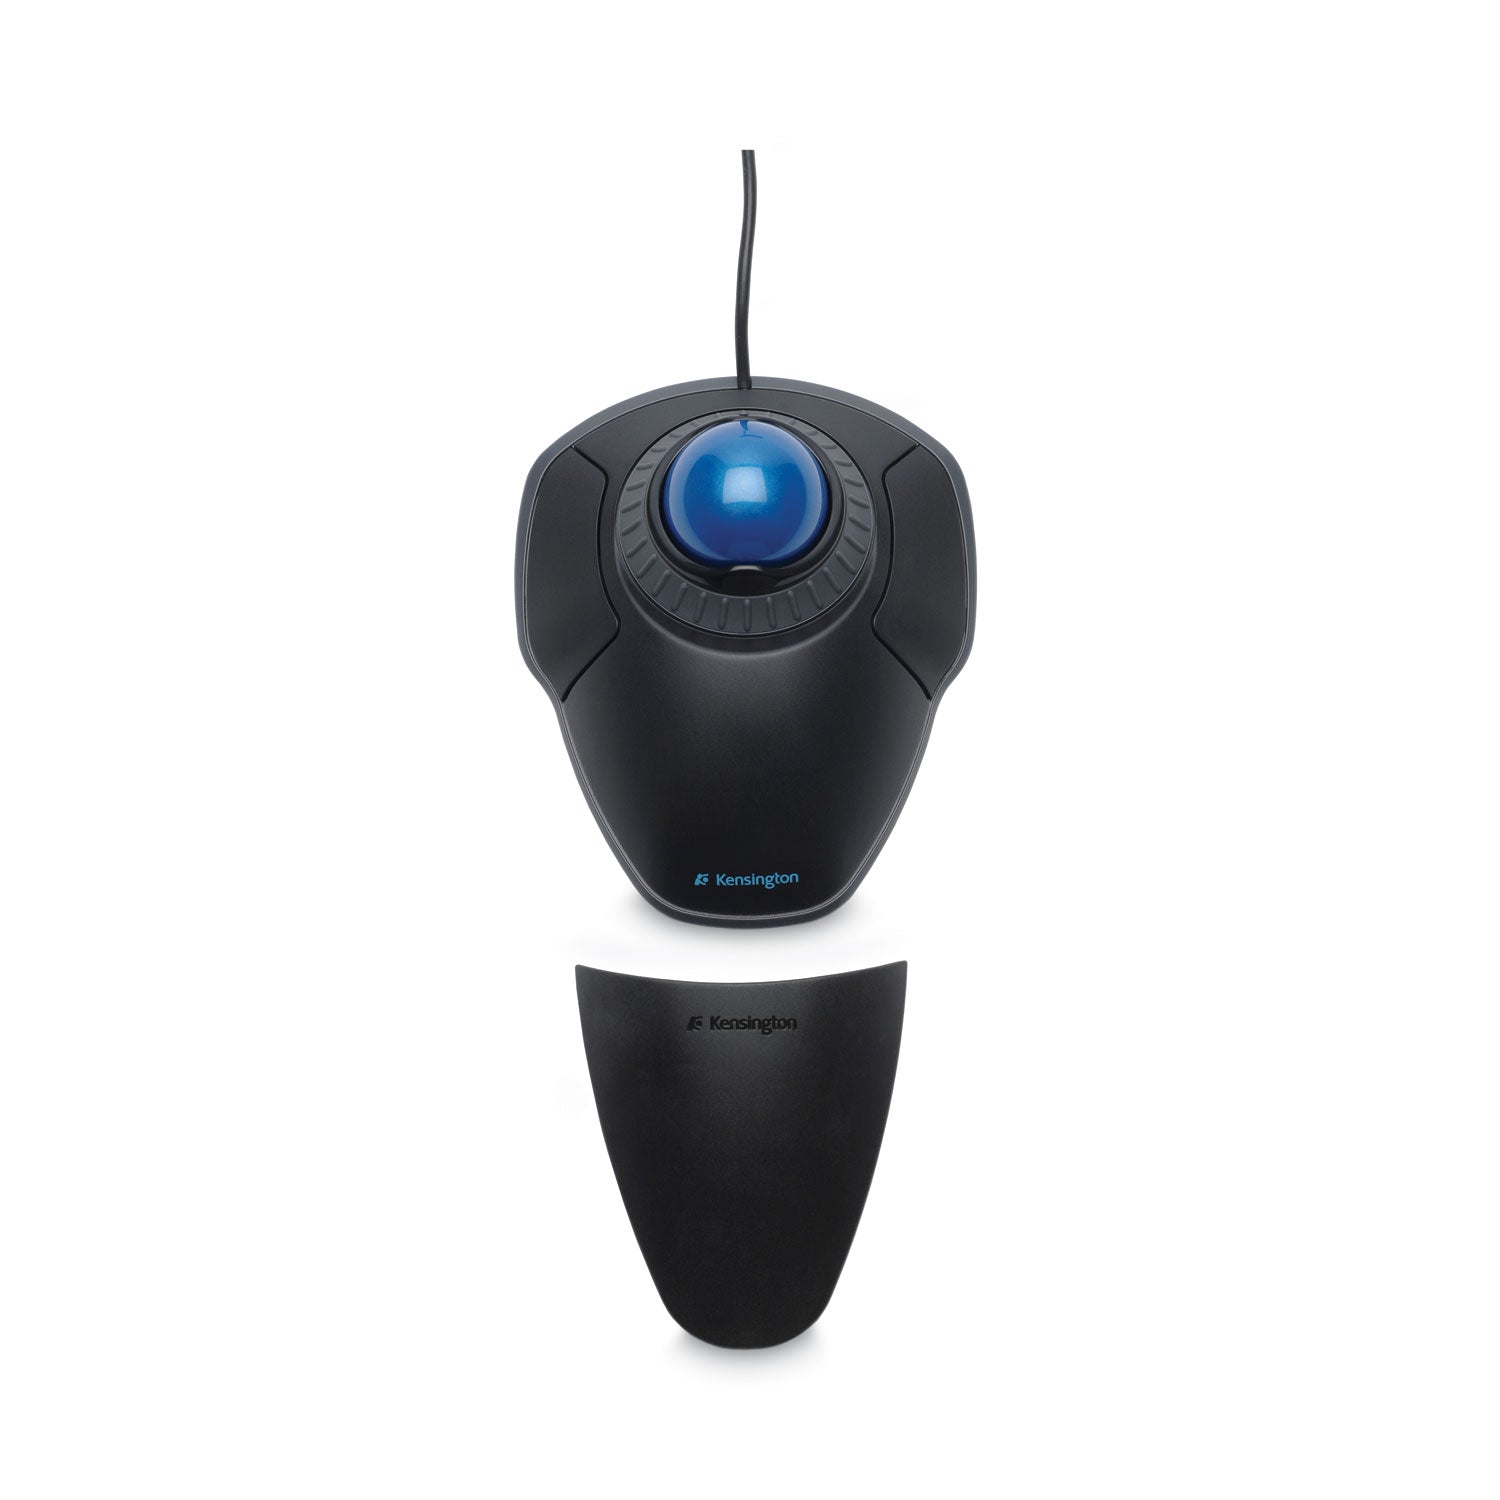 Orbit Trackball with Scroll Ring, USB 2.0, Left/Right Hand Use, Black/Blue - 